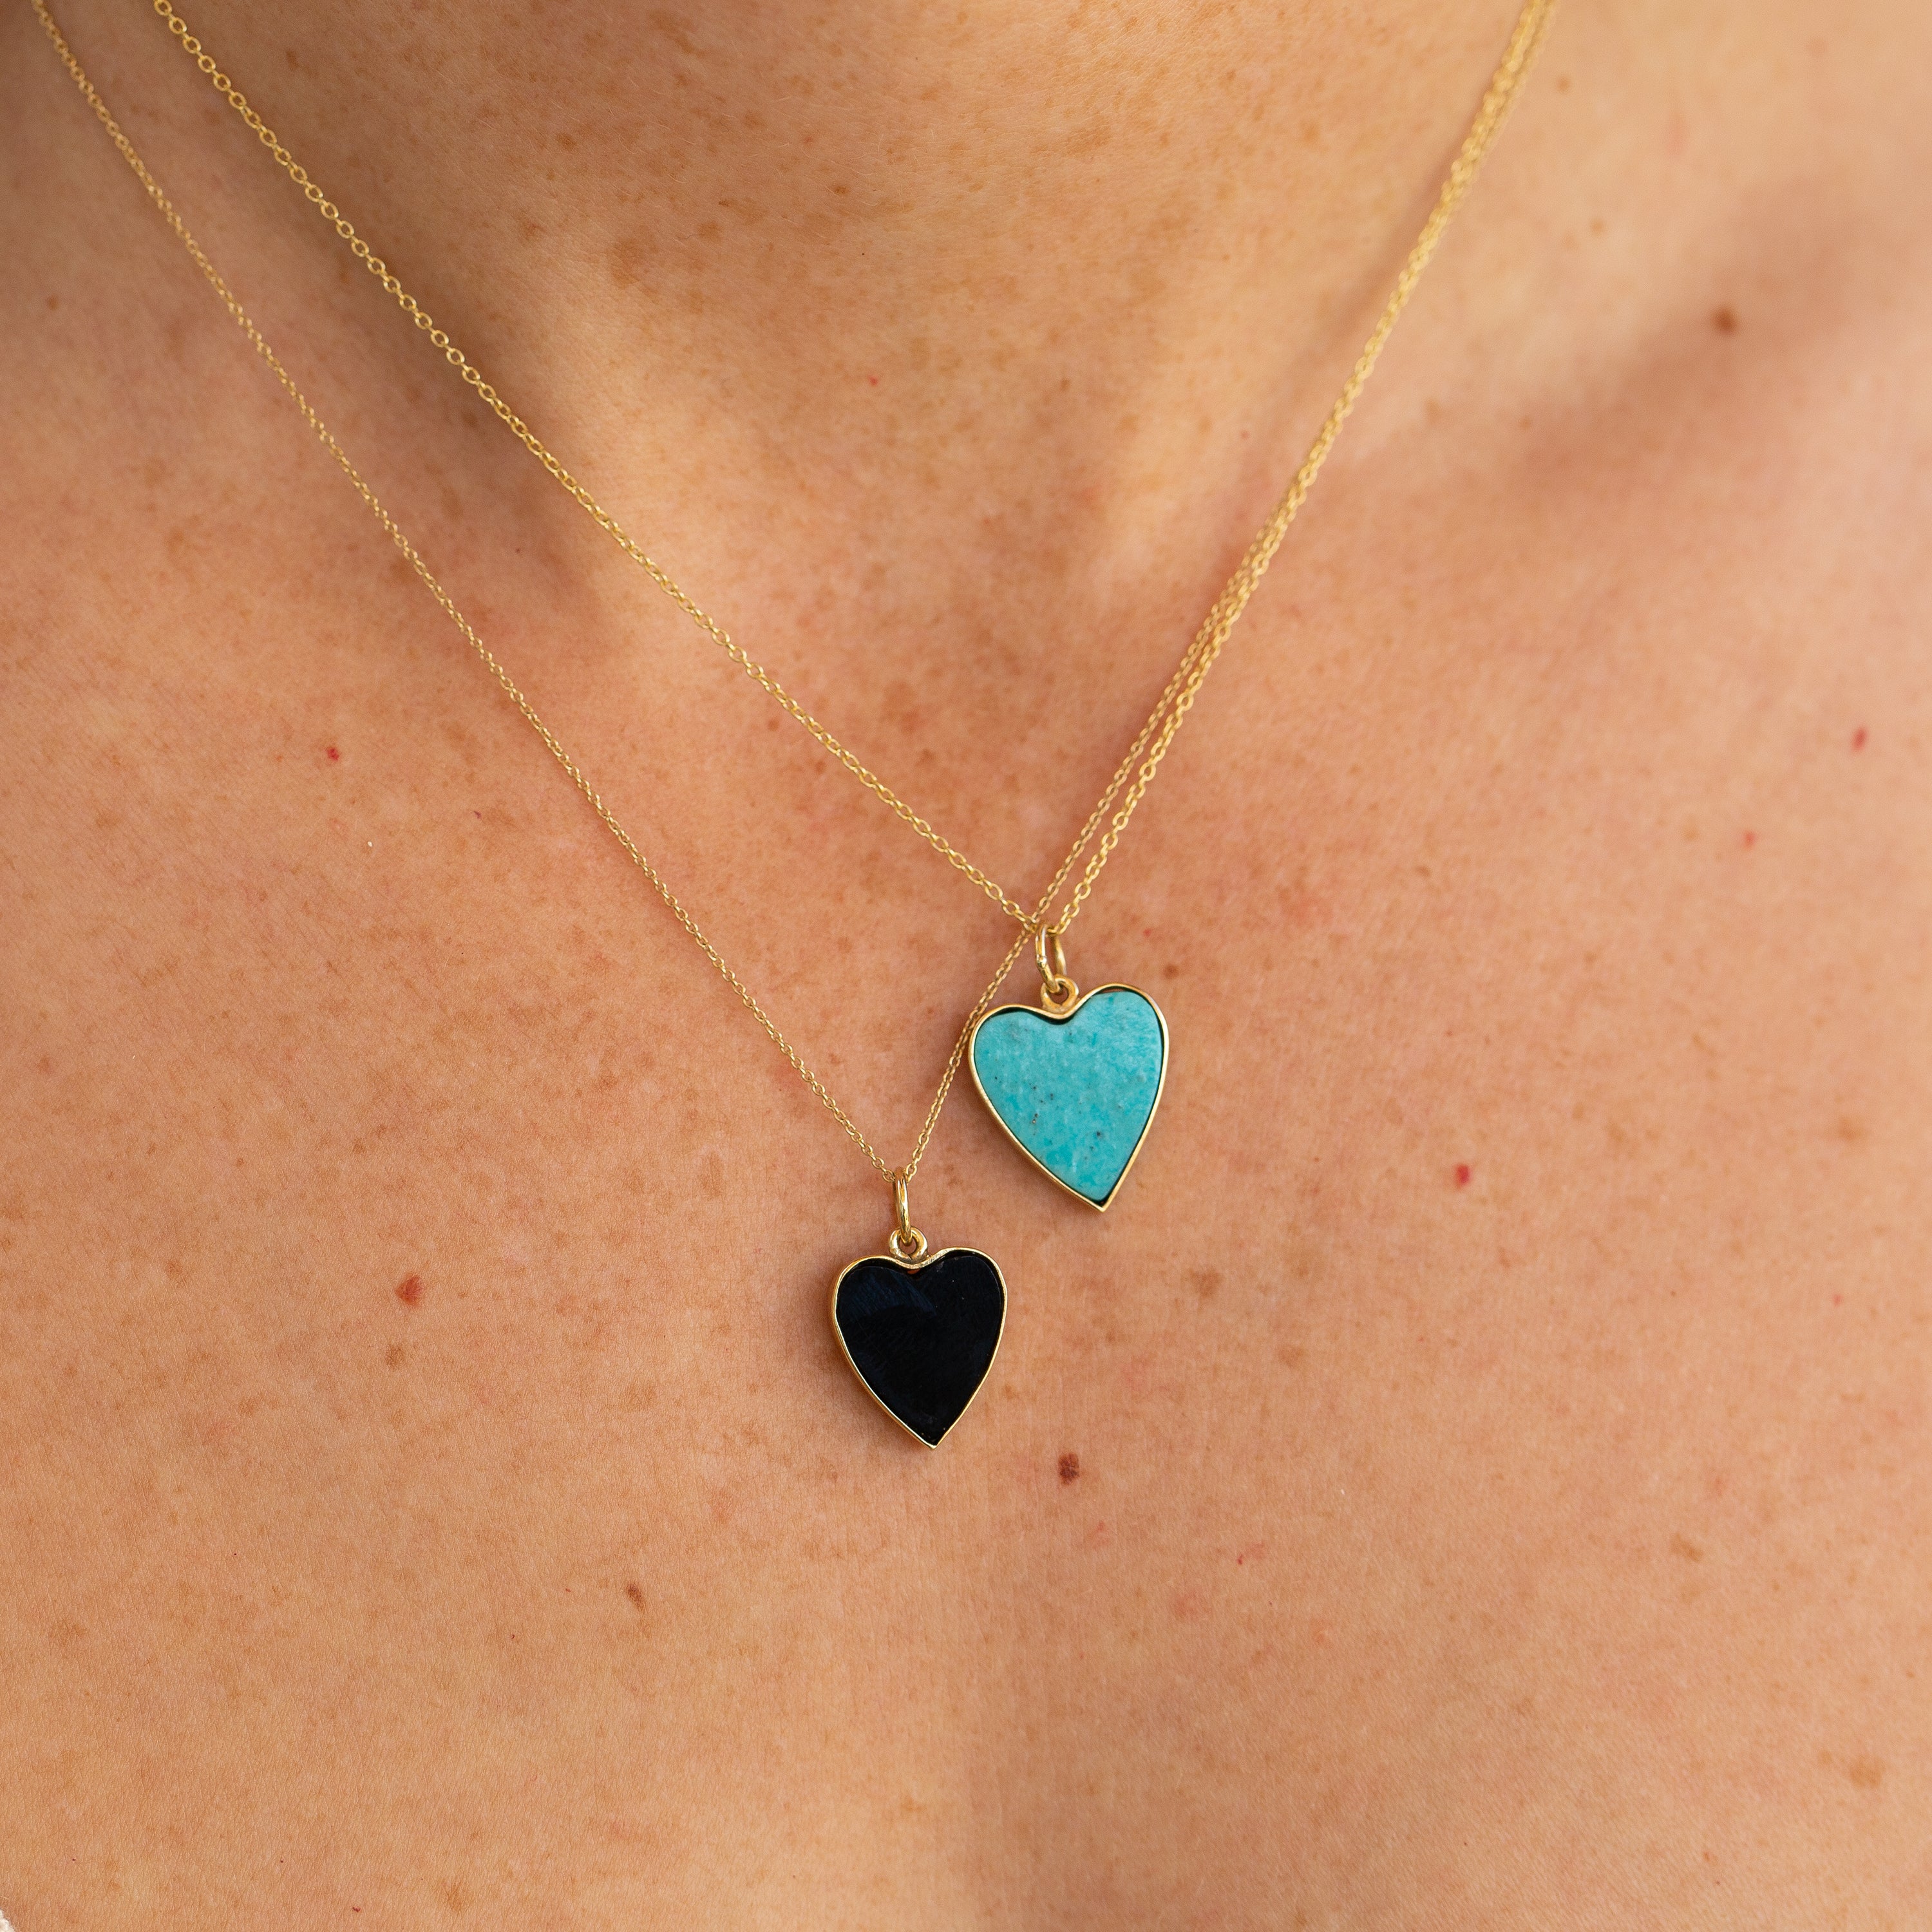 The F&B Medium Turquoise Heart 14k Gold Charm